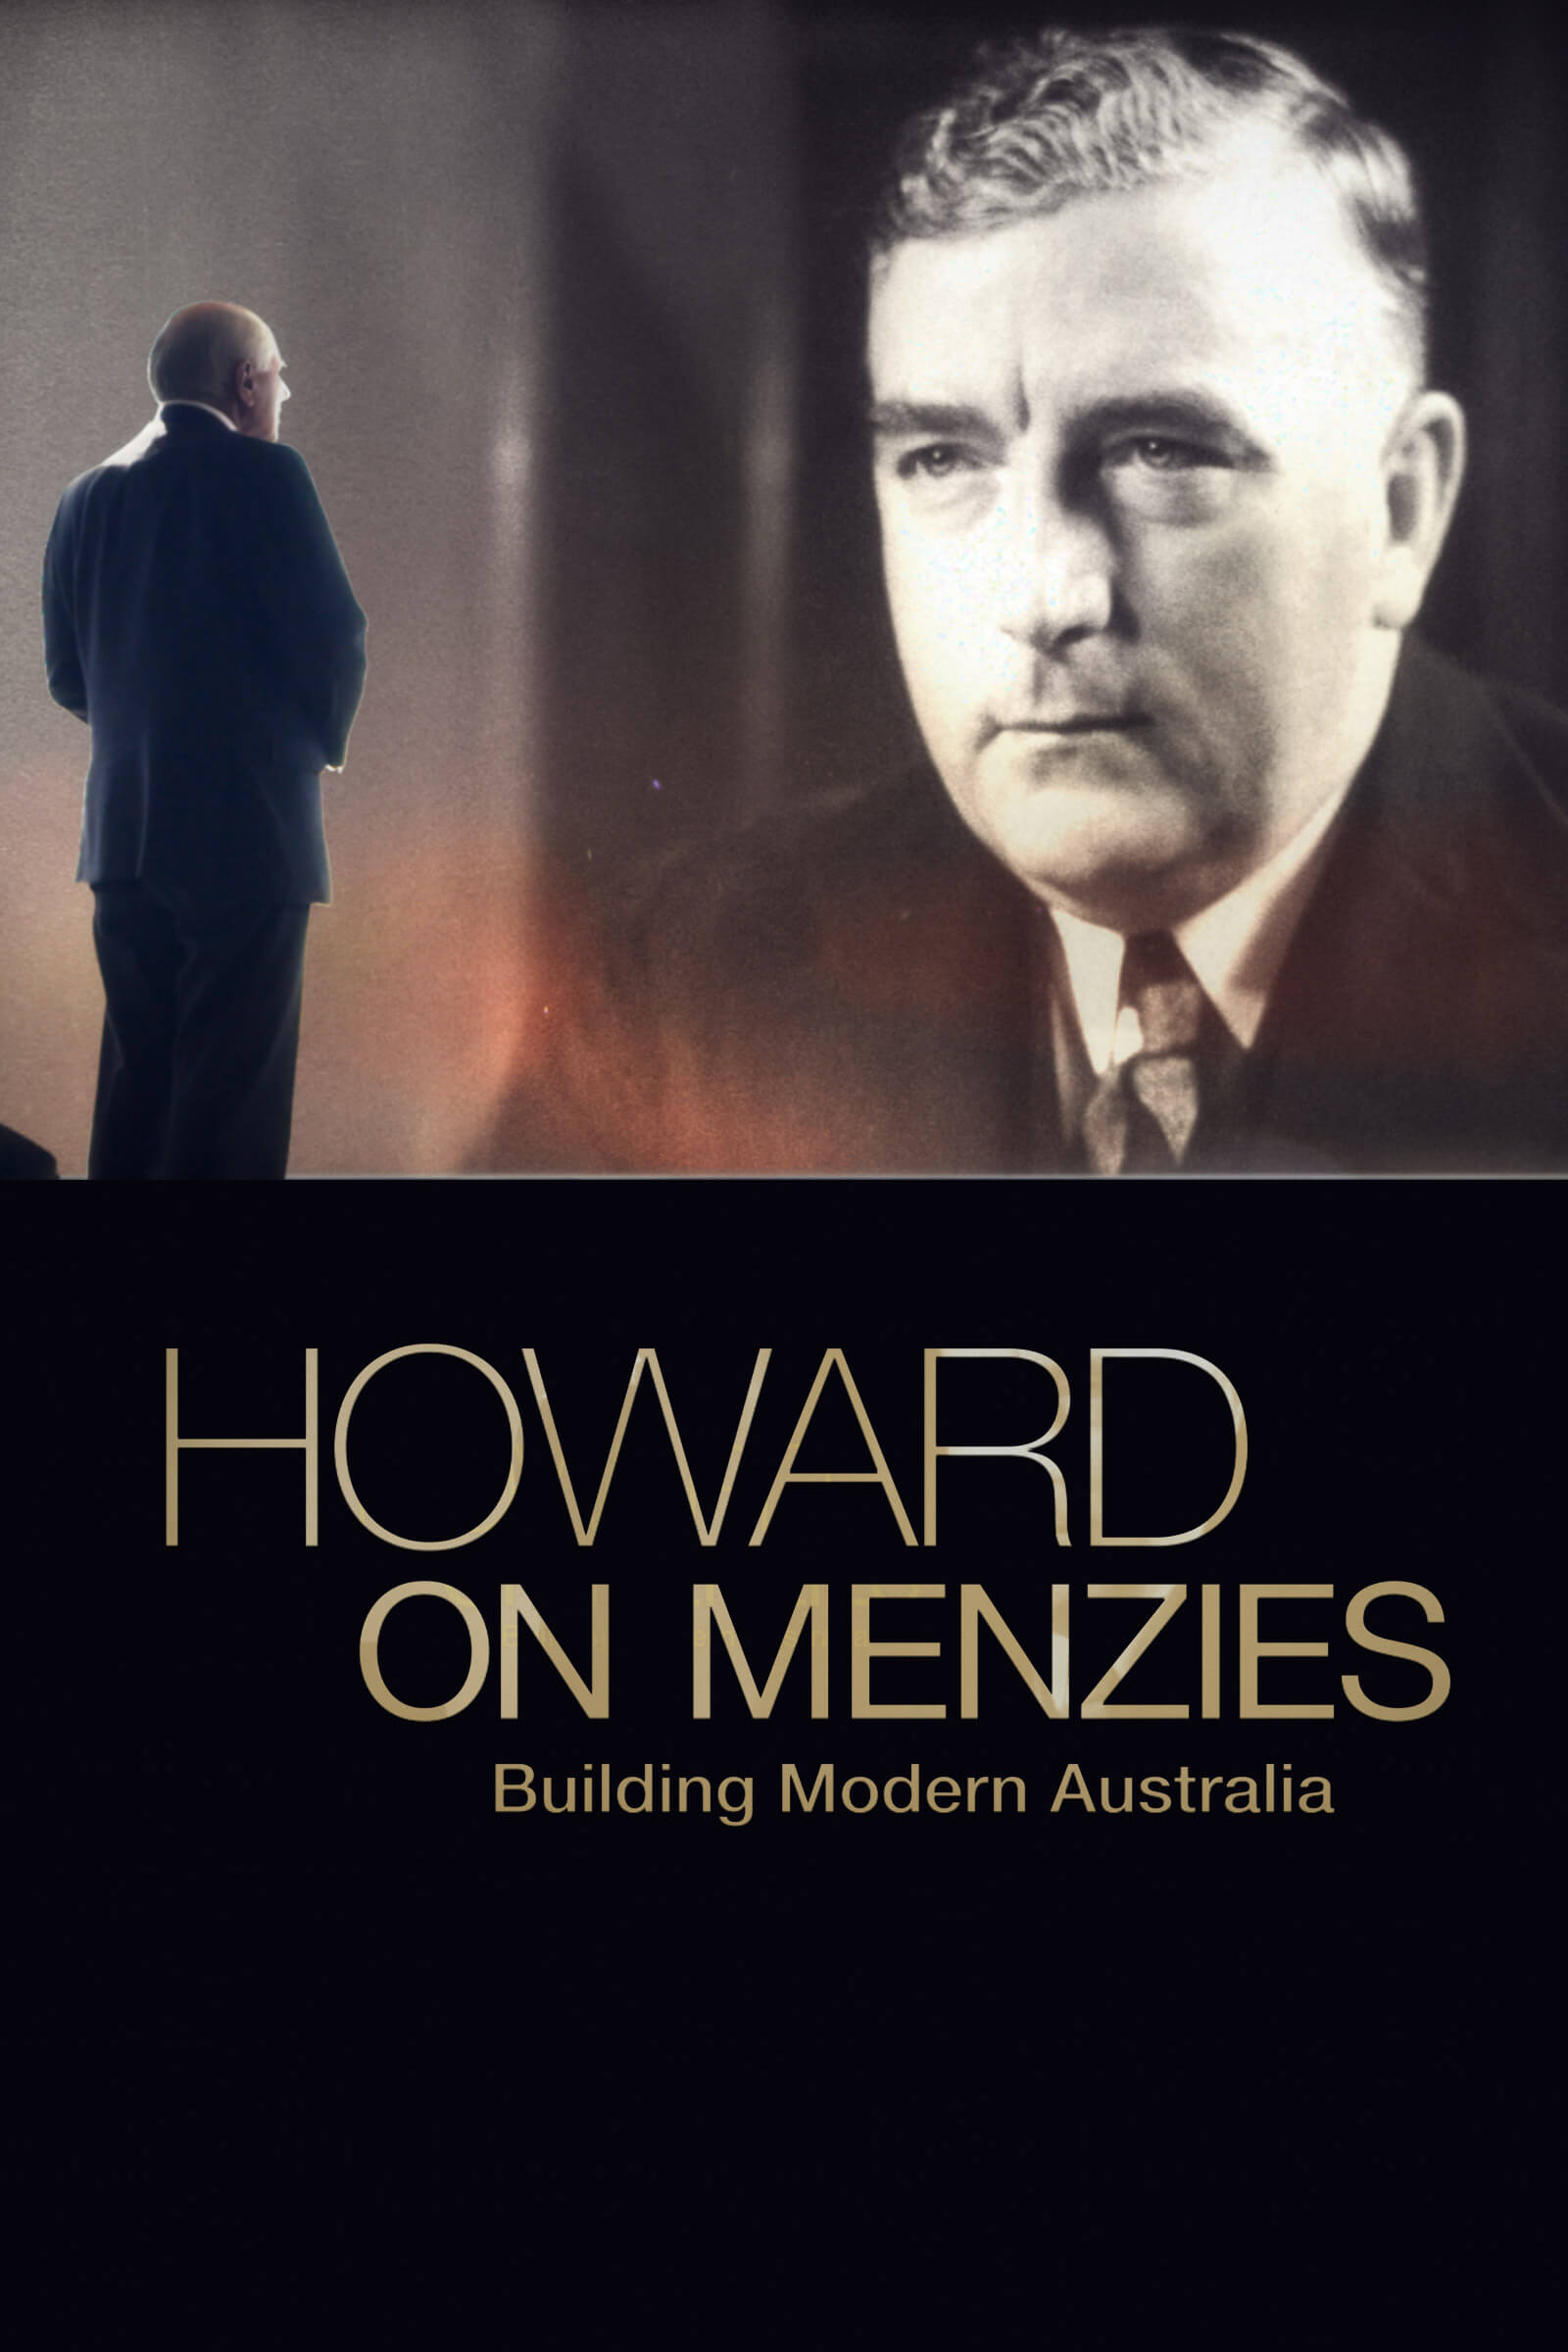 Where to stream Howard on Menzies